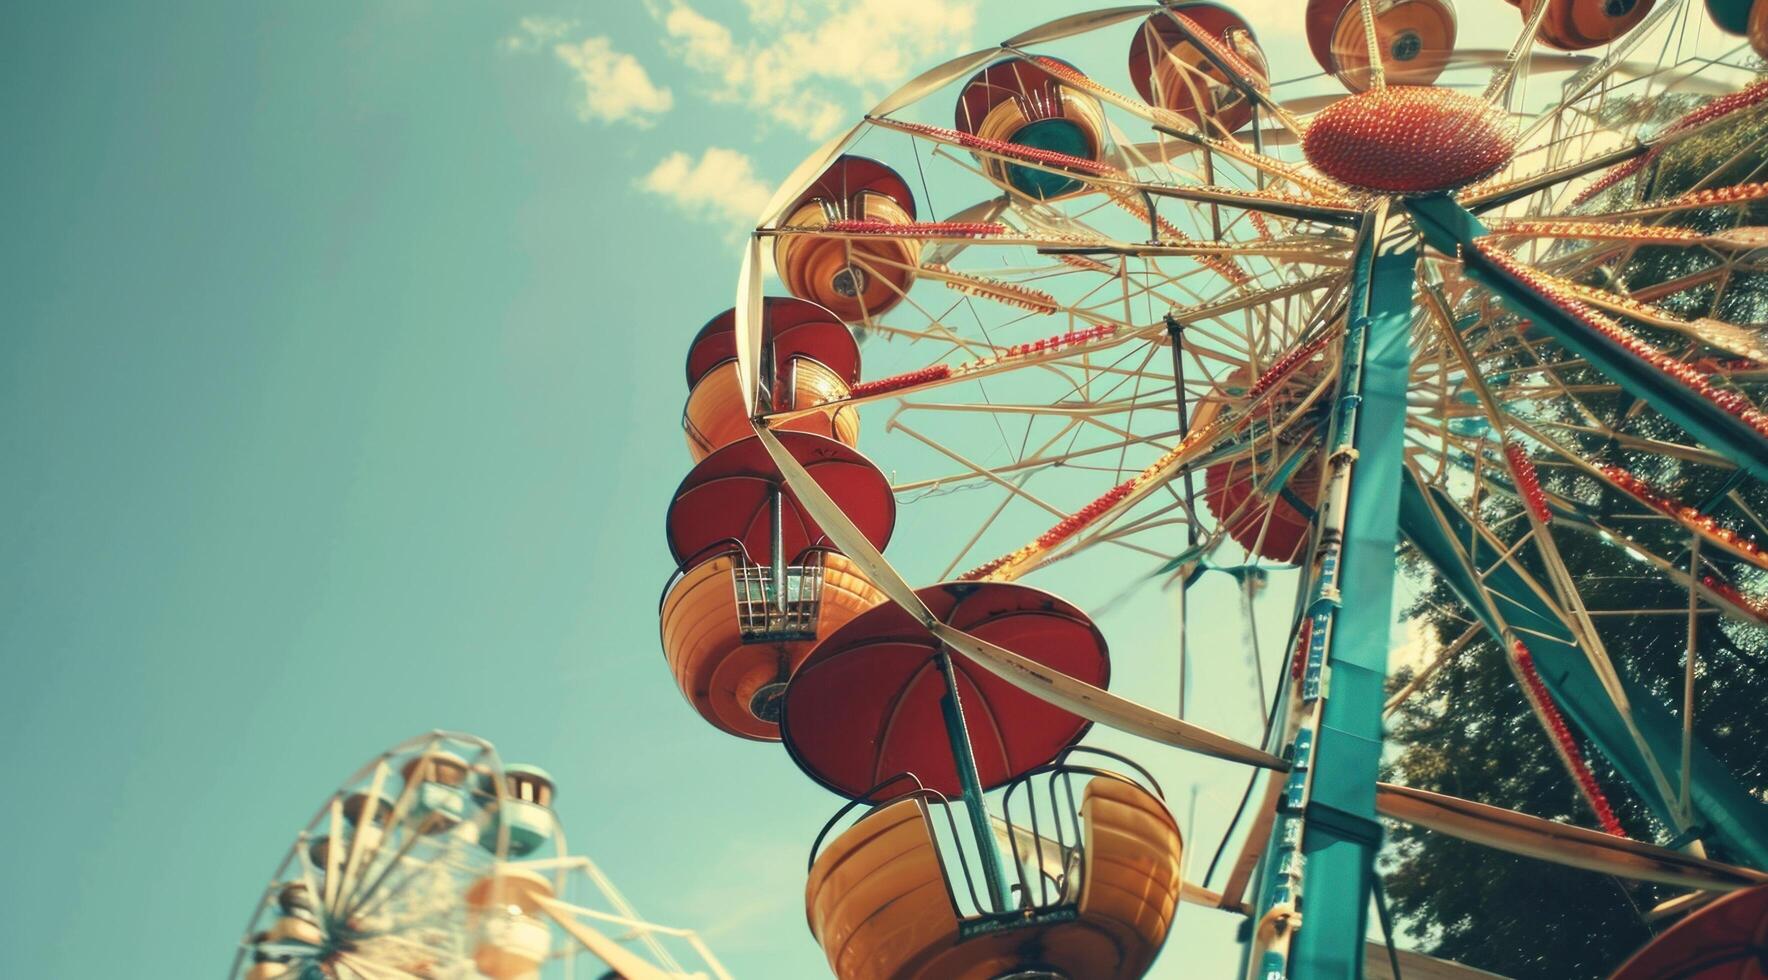 AI generated a ferris wheel at an amusement park photo